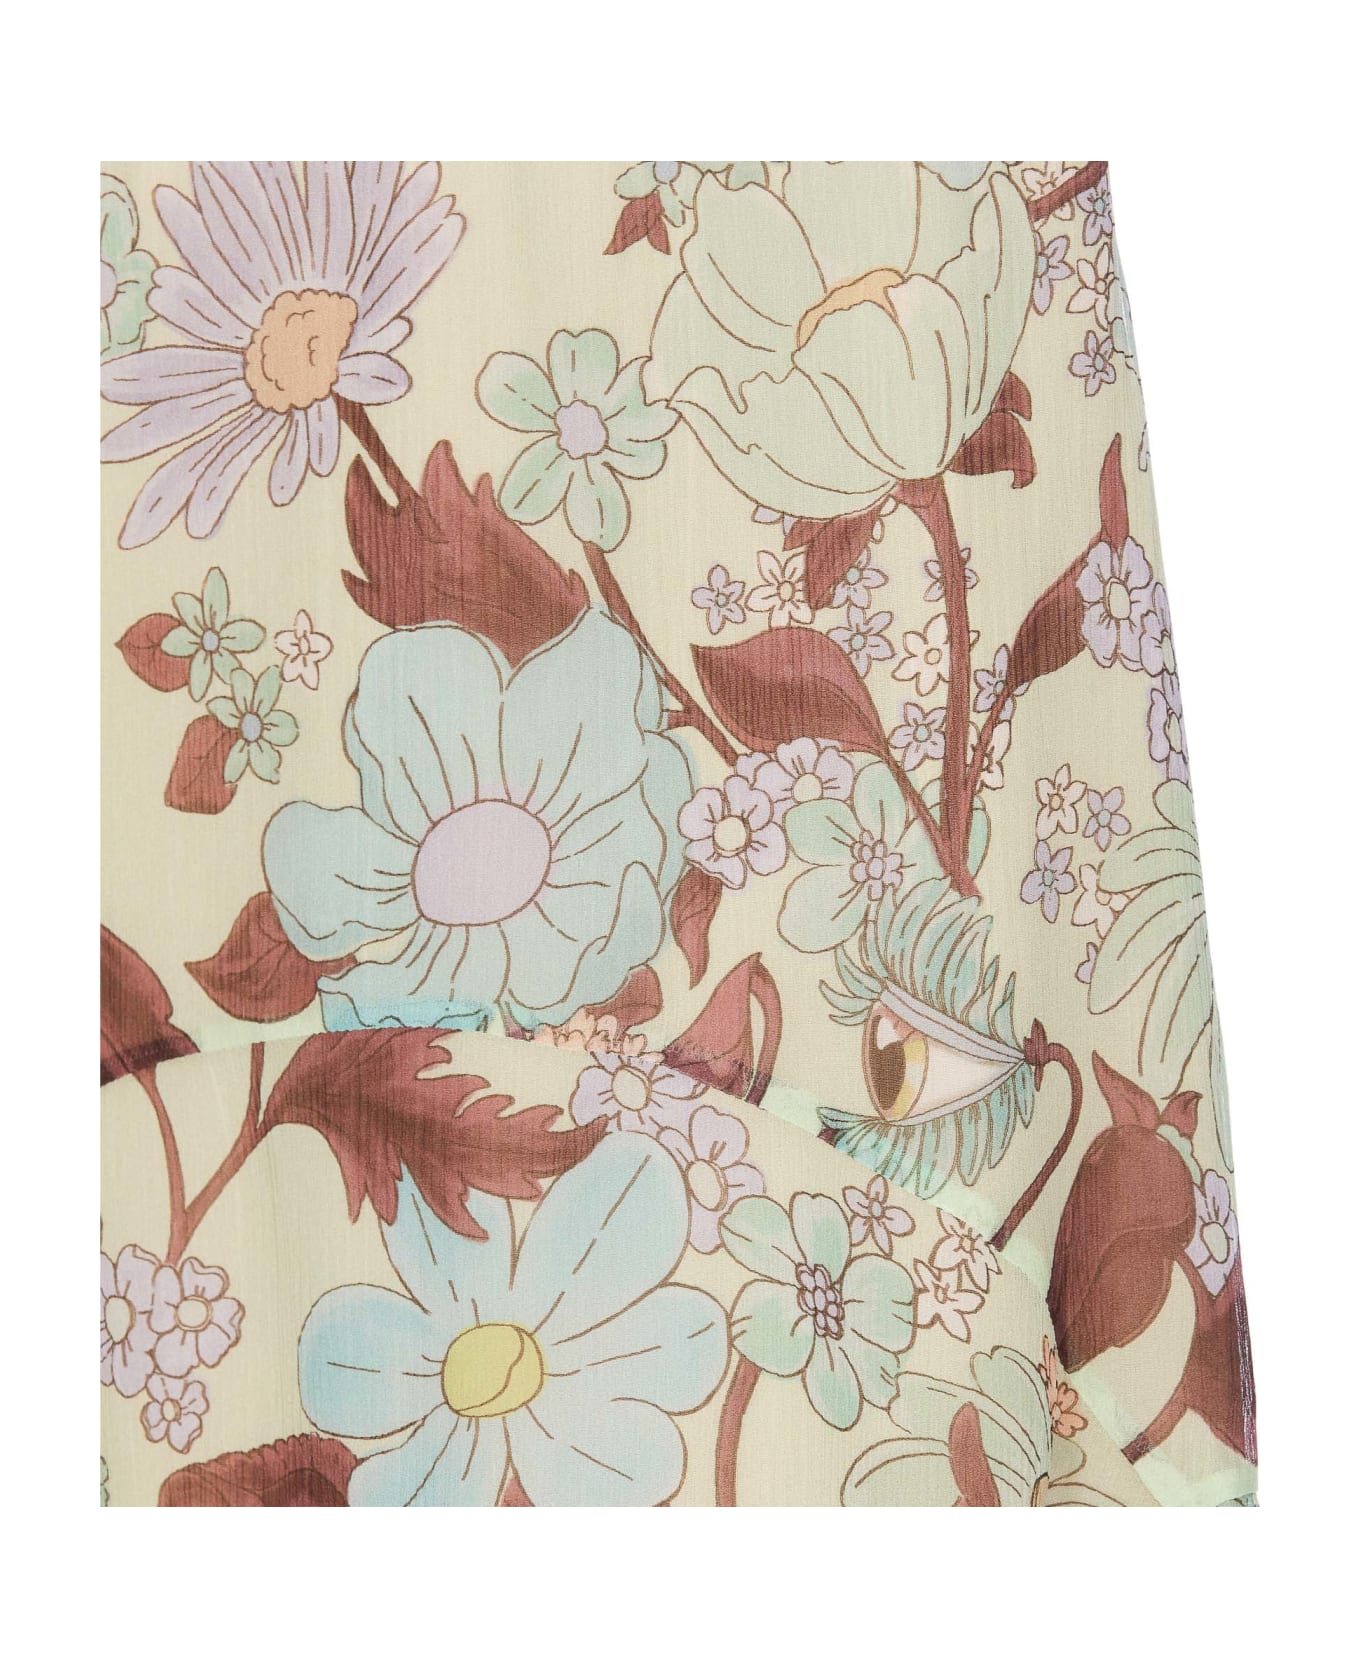 Stella McCartney Silk Skirt - MultiColour スカート